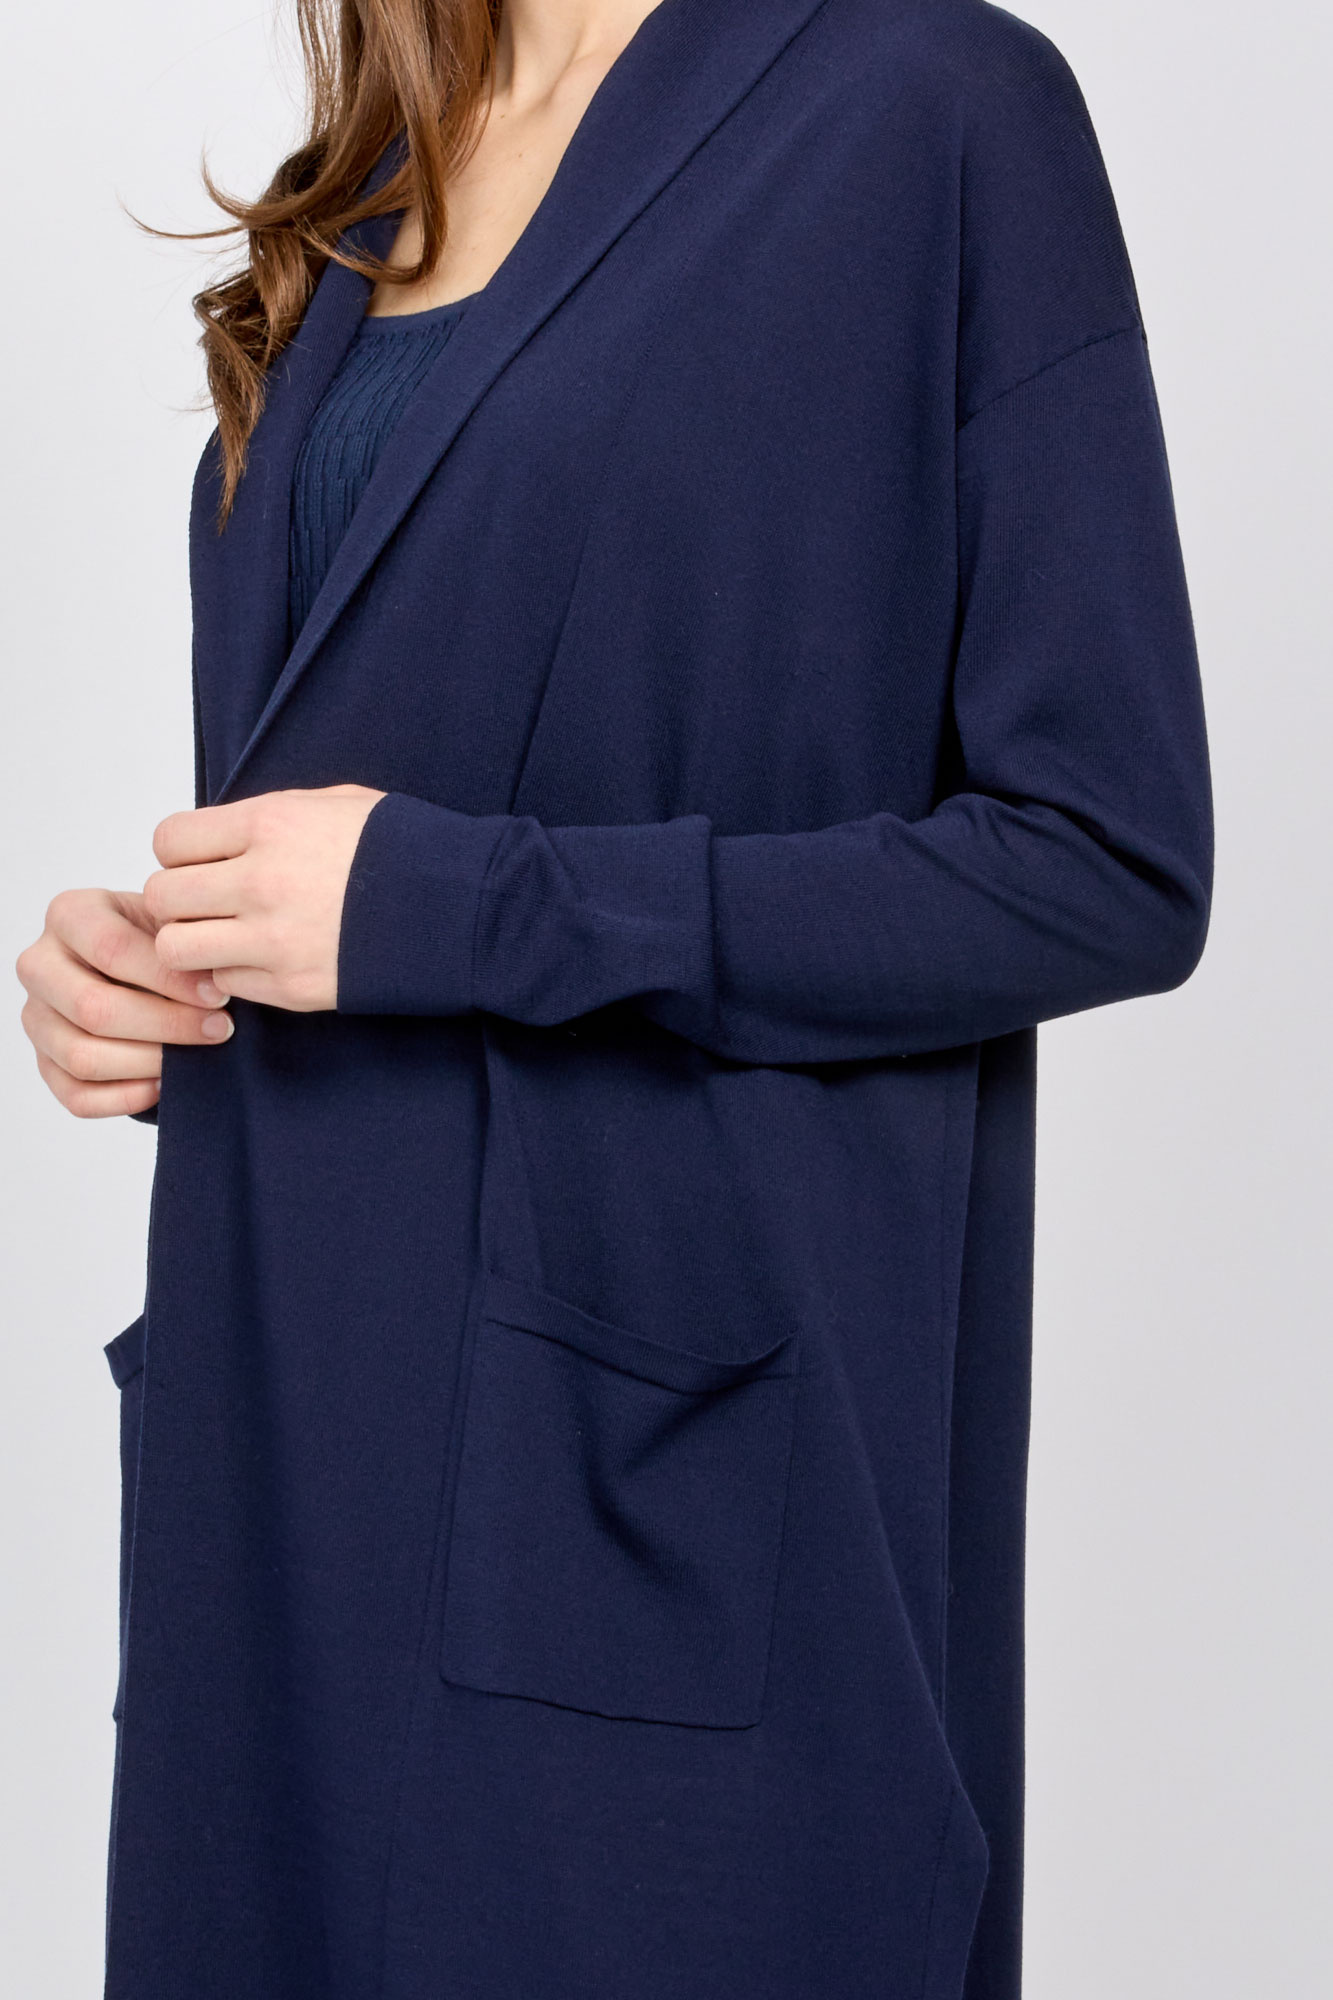 EMPROVED Mid Length Robe Cardigan | Dan Joyce Clothing - Dan Joyce Clothing